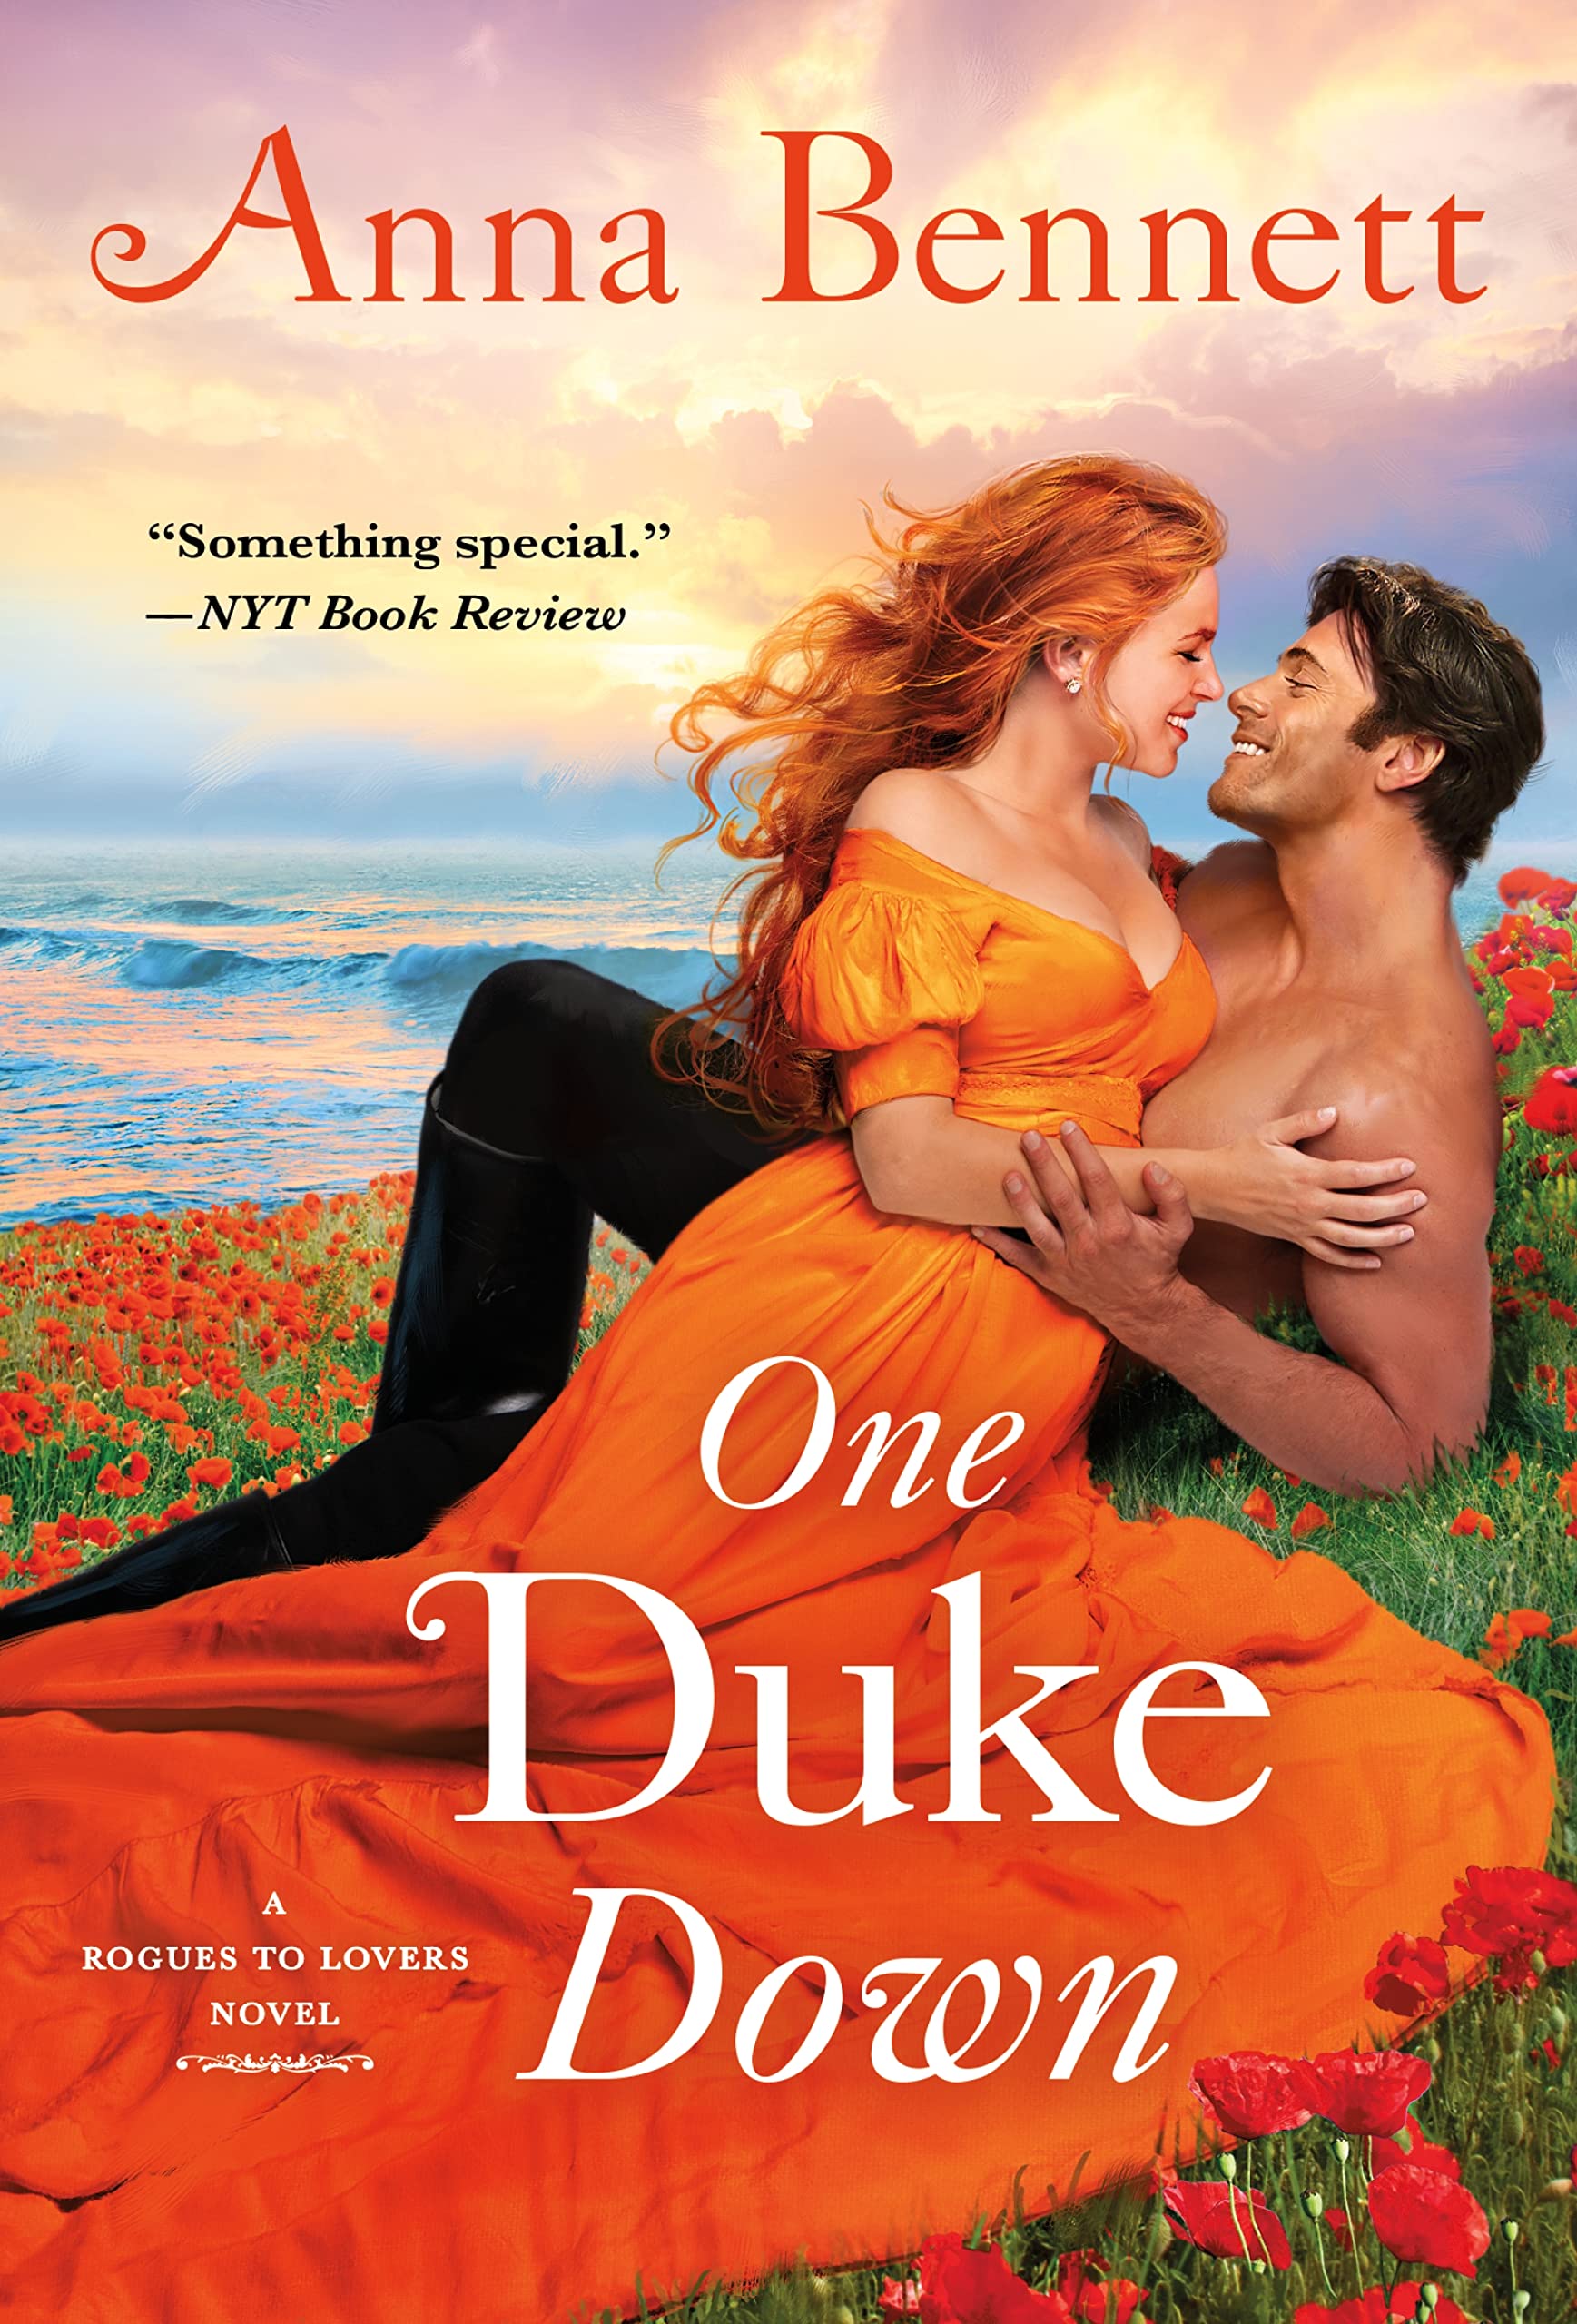 One Duke Down--A Rogues to Love - Anna Bennett